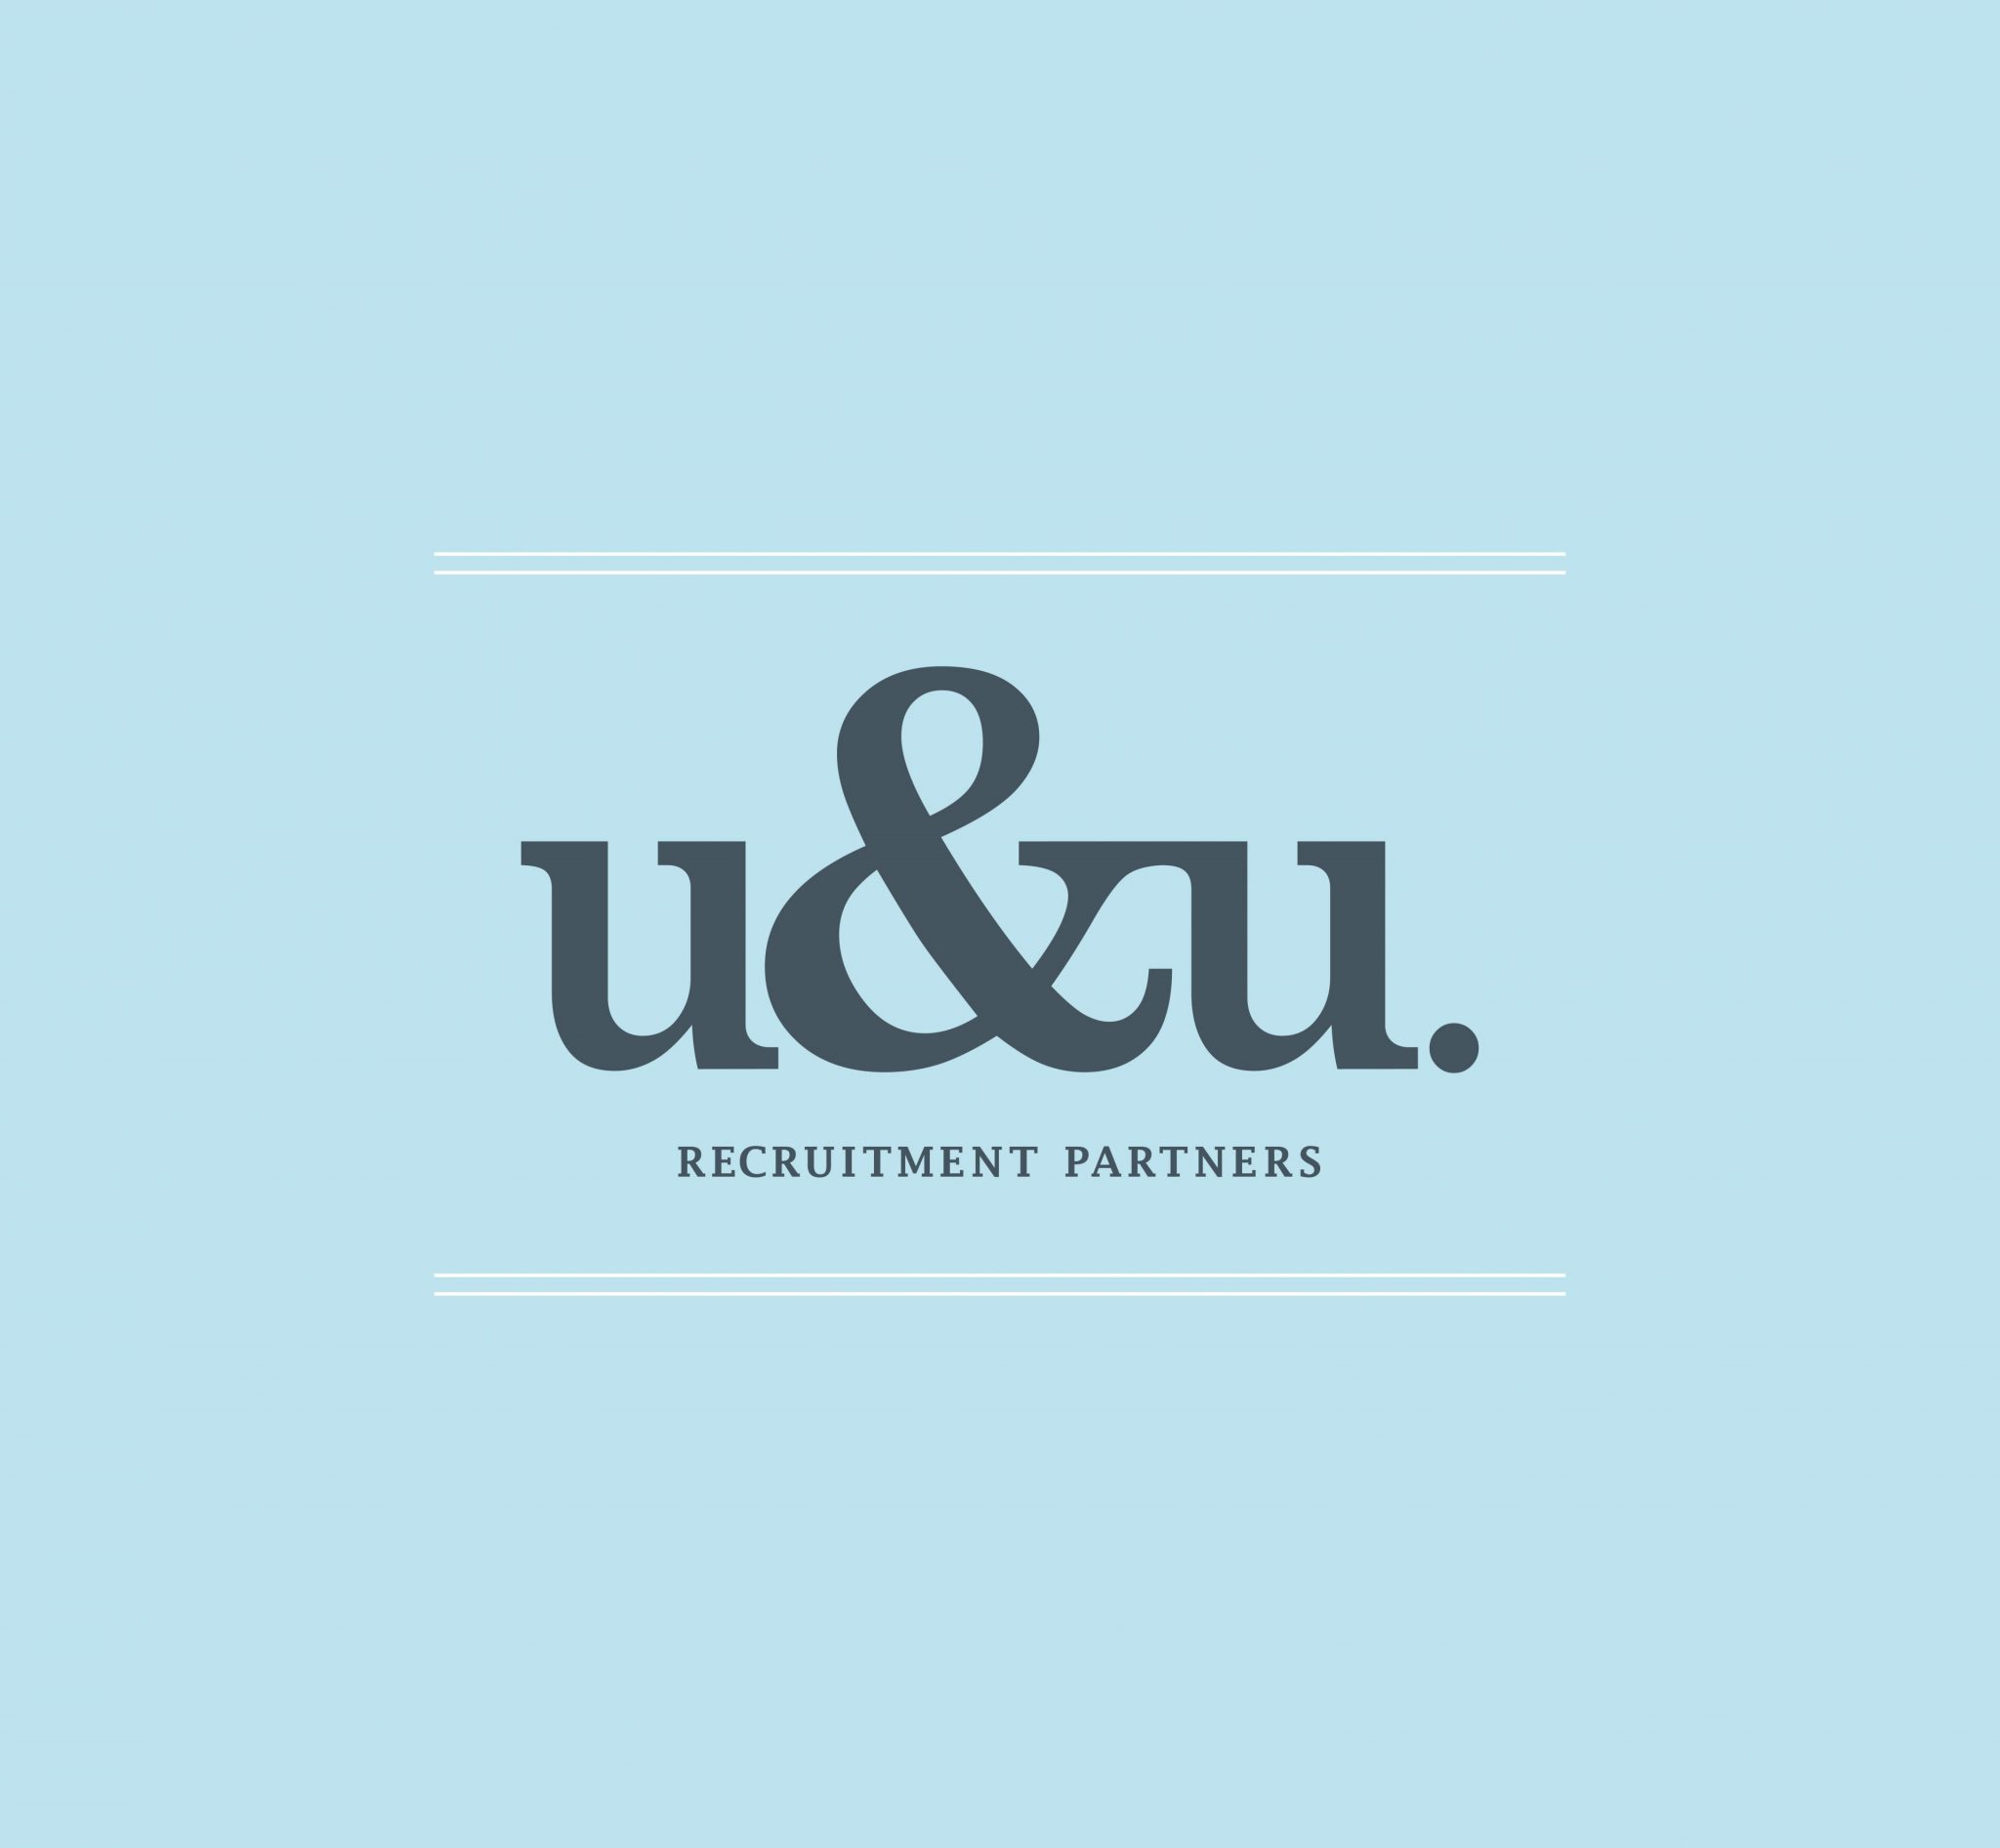 New brand for Brisbane recruitment partners u&u by branding company DAIS